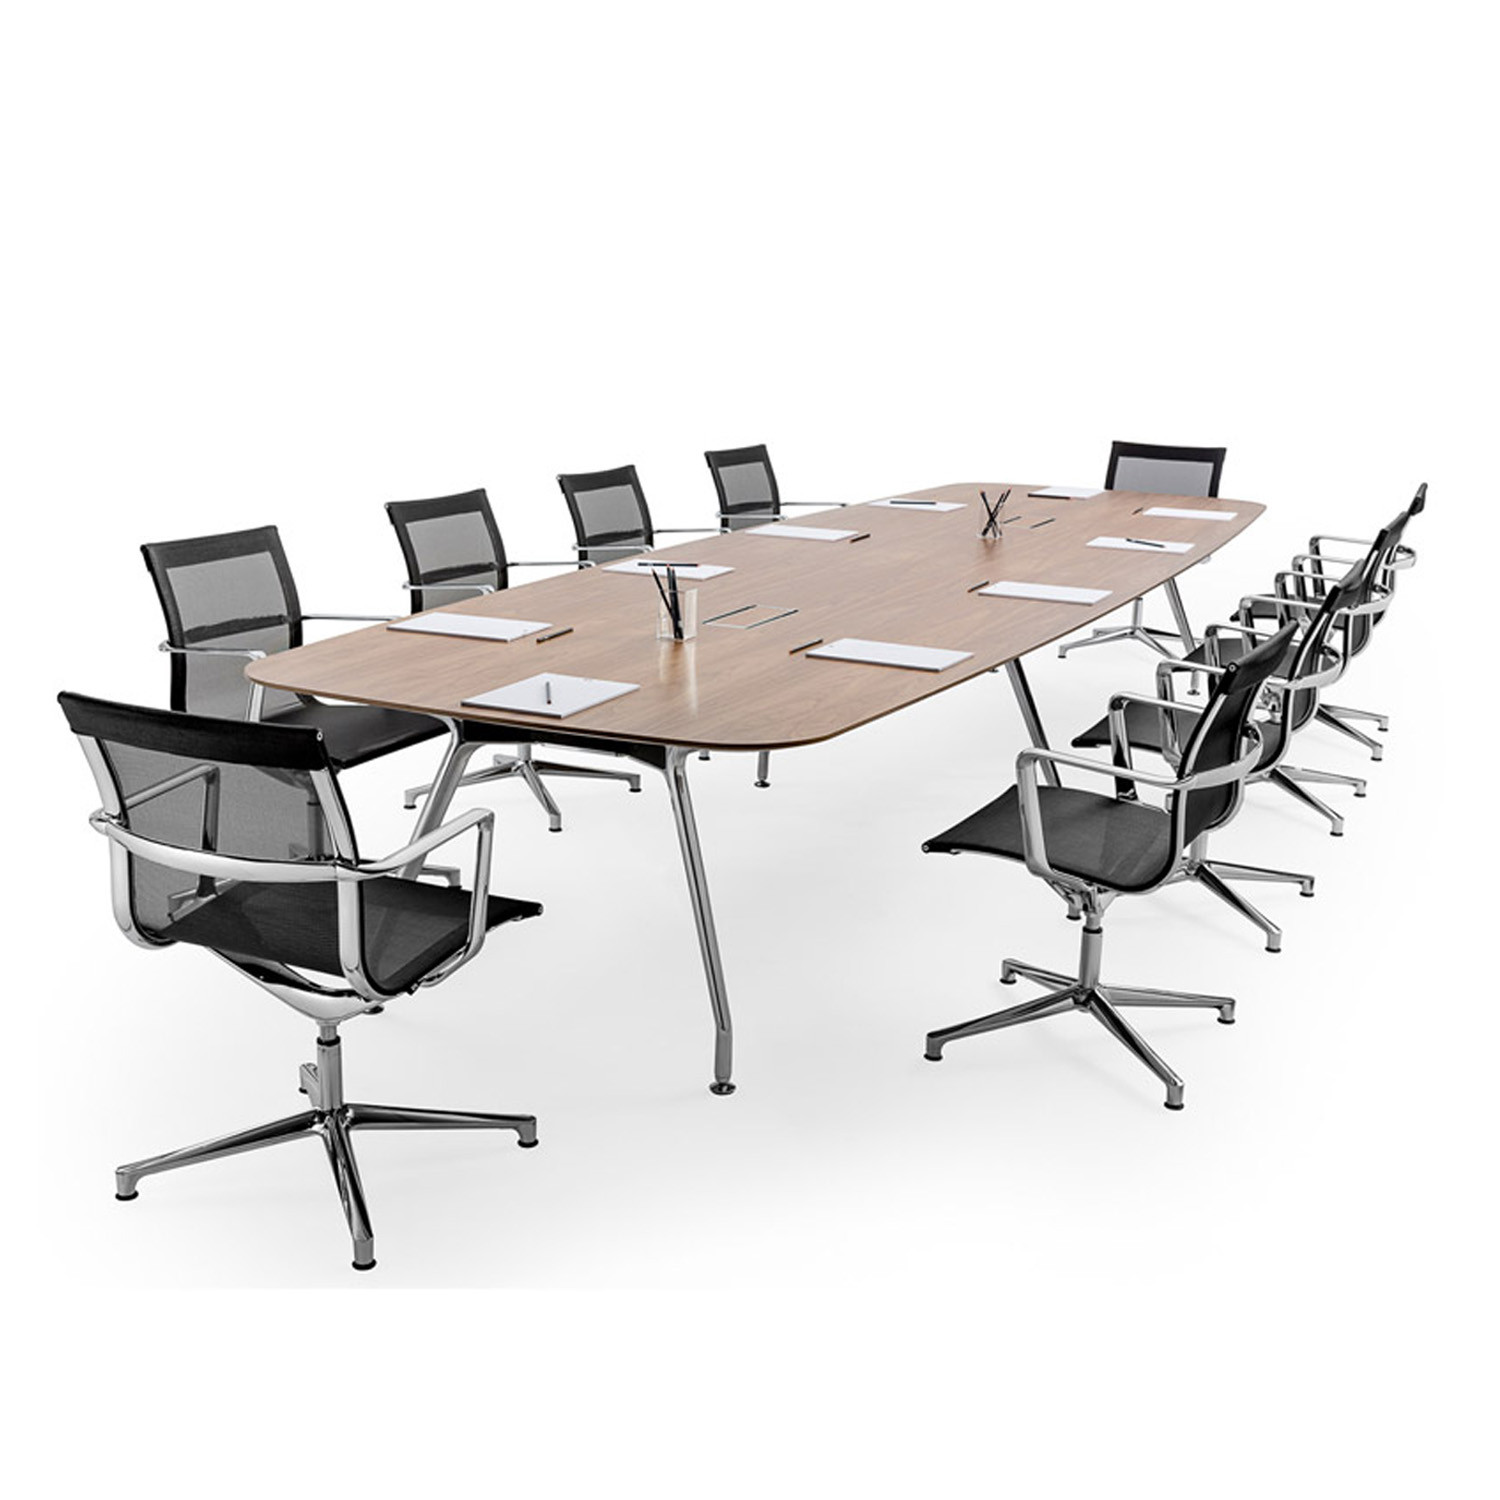 Unitable Meeting Tables